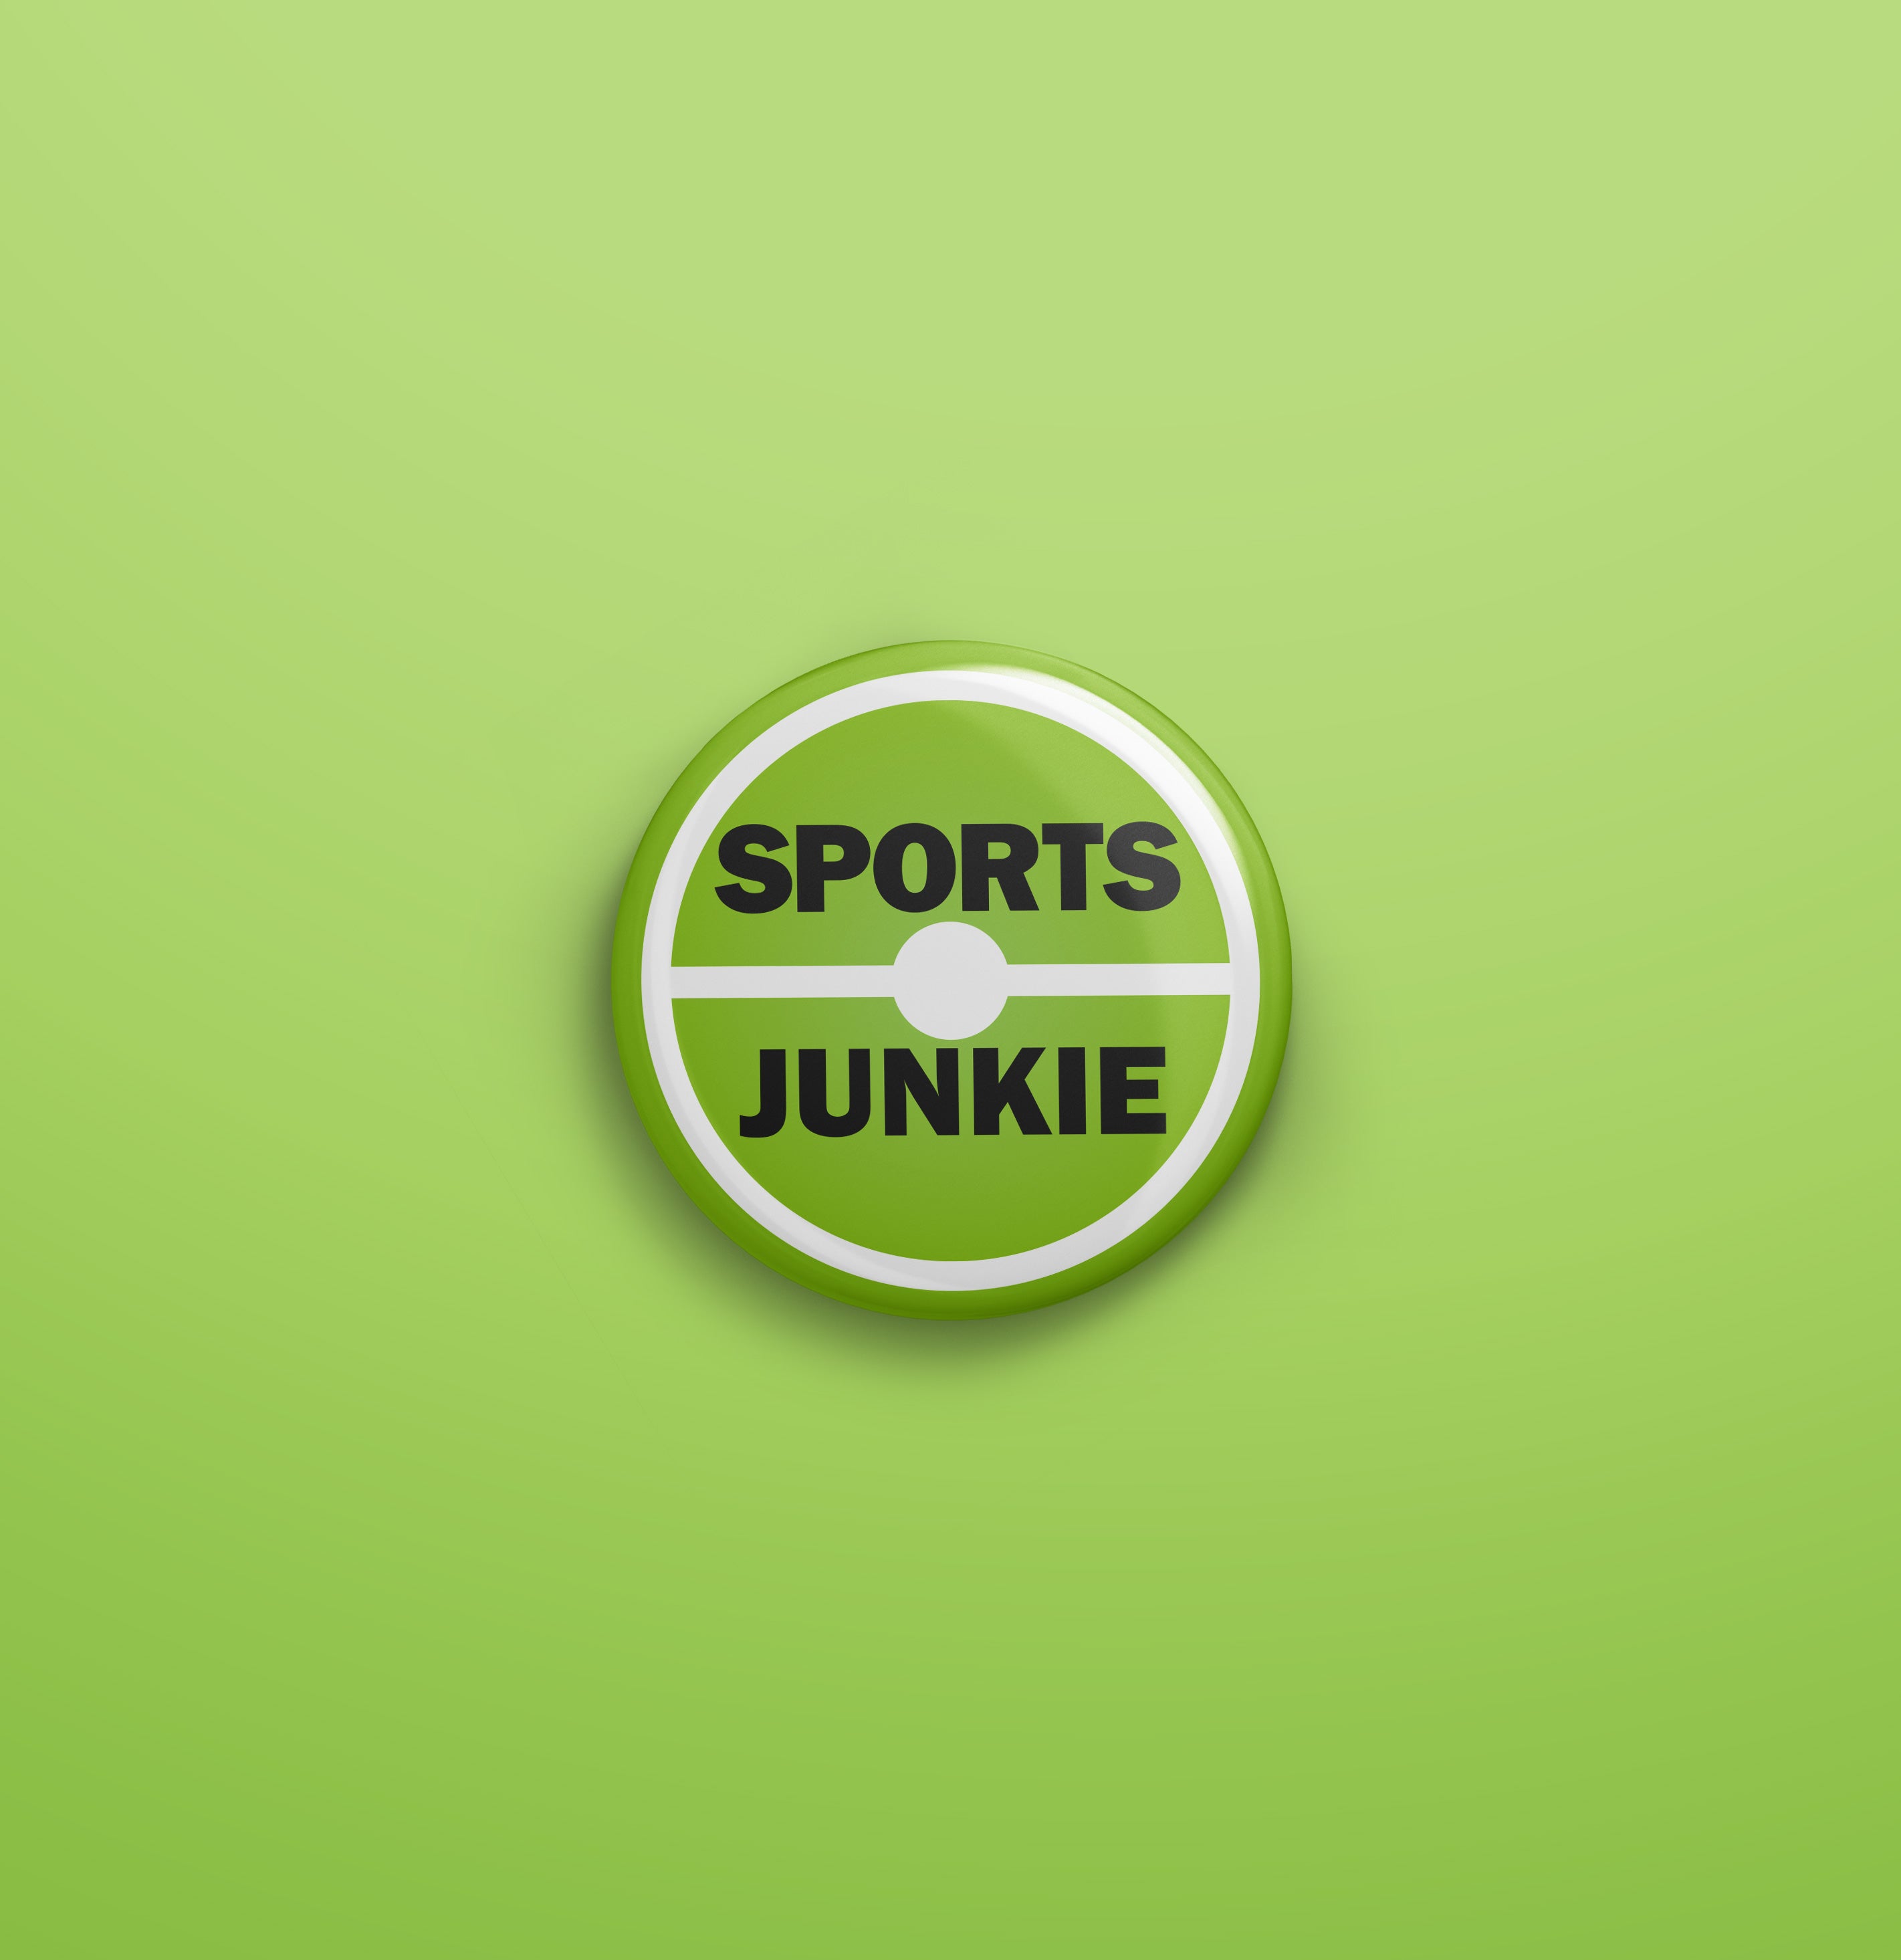 Sports Junkie